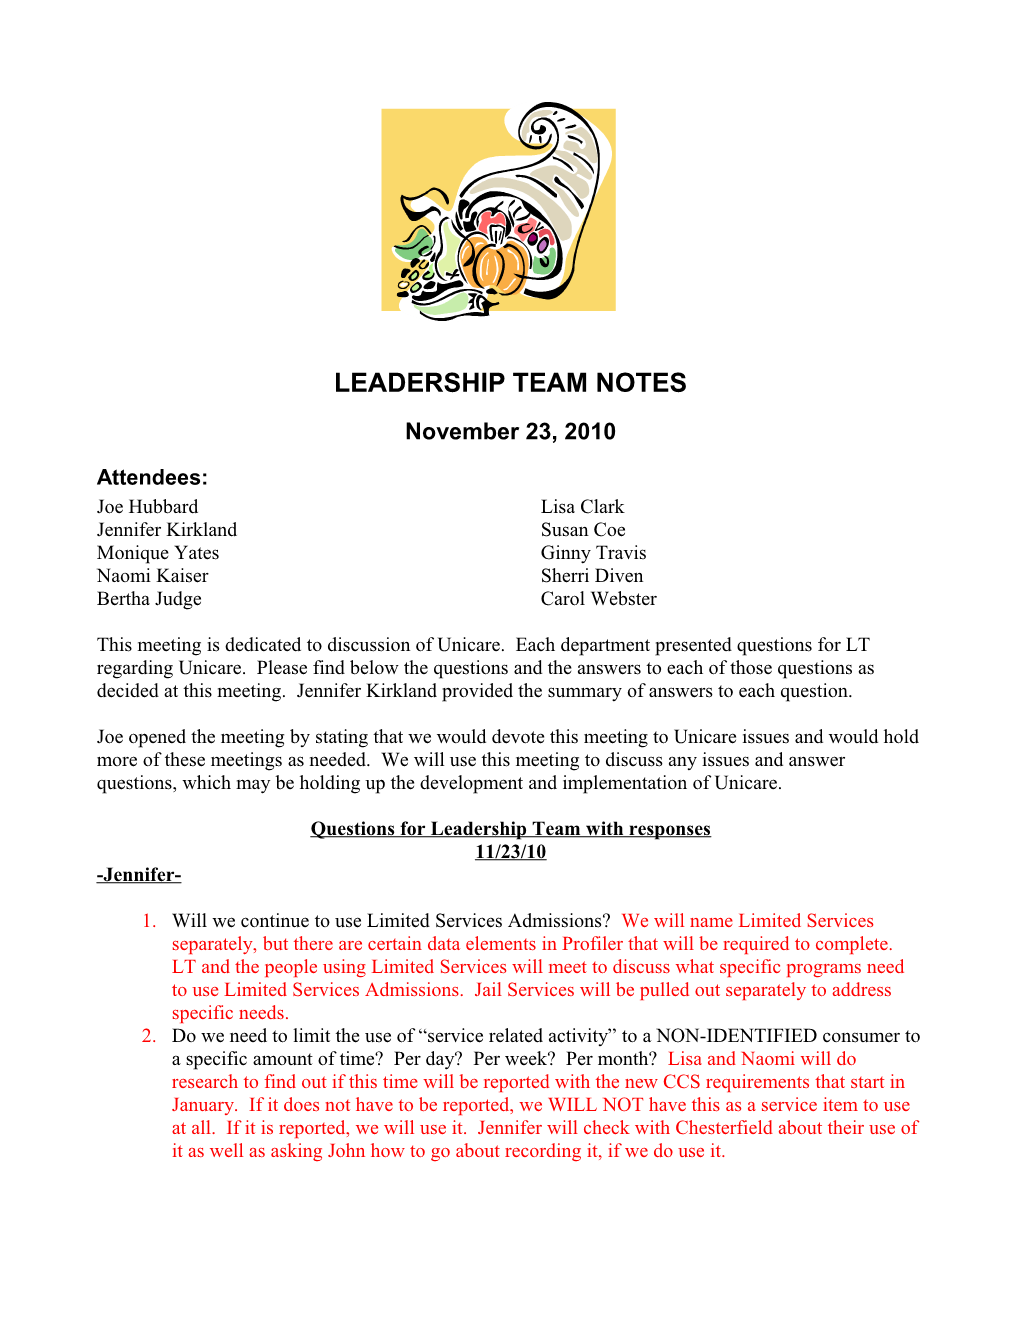 Leadership Team Notes s1